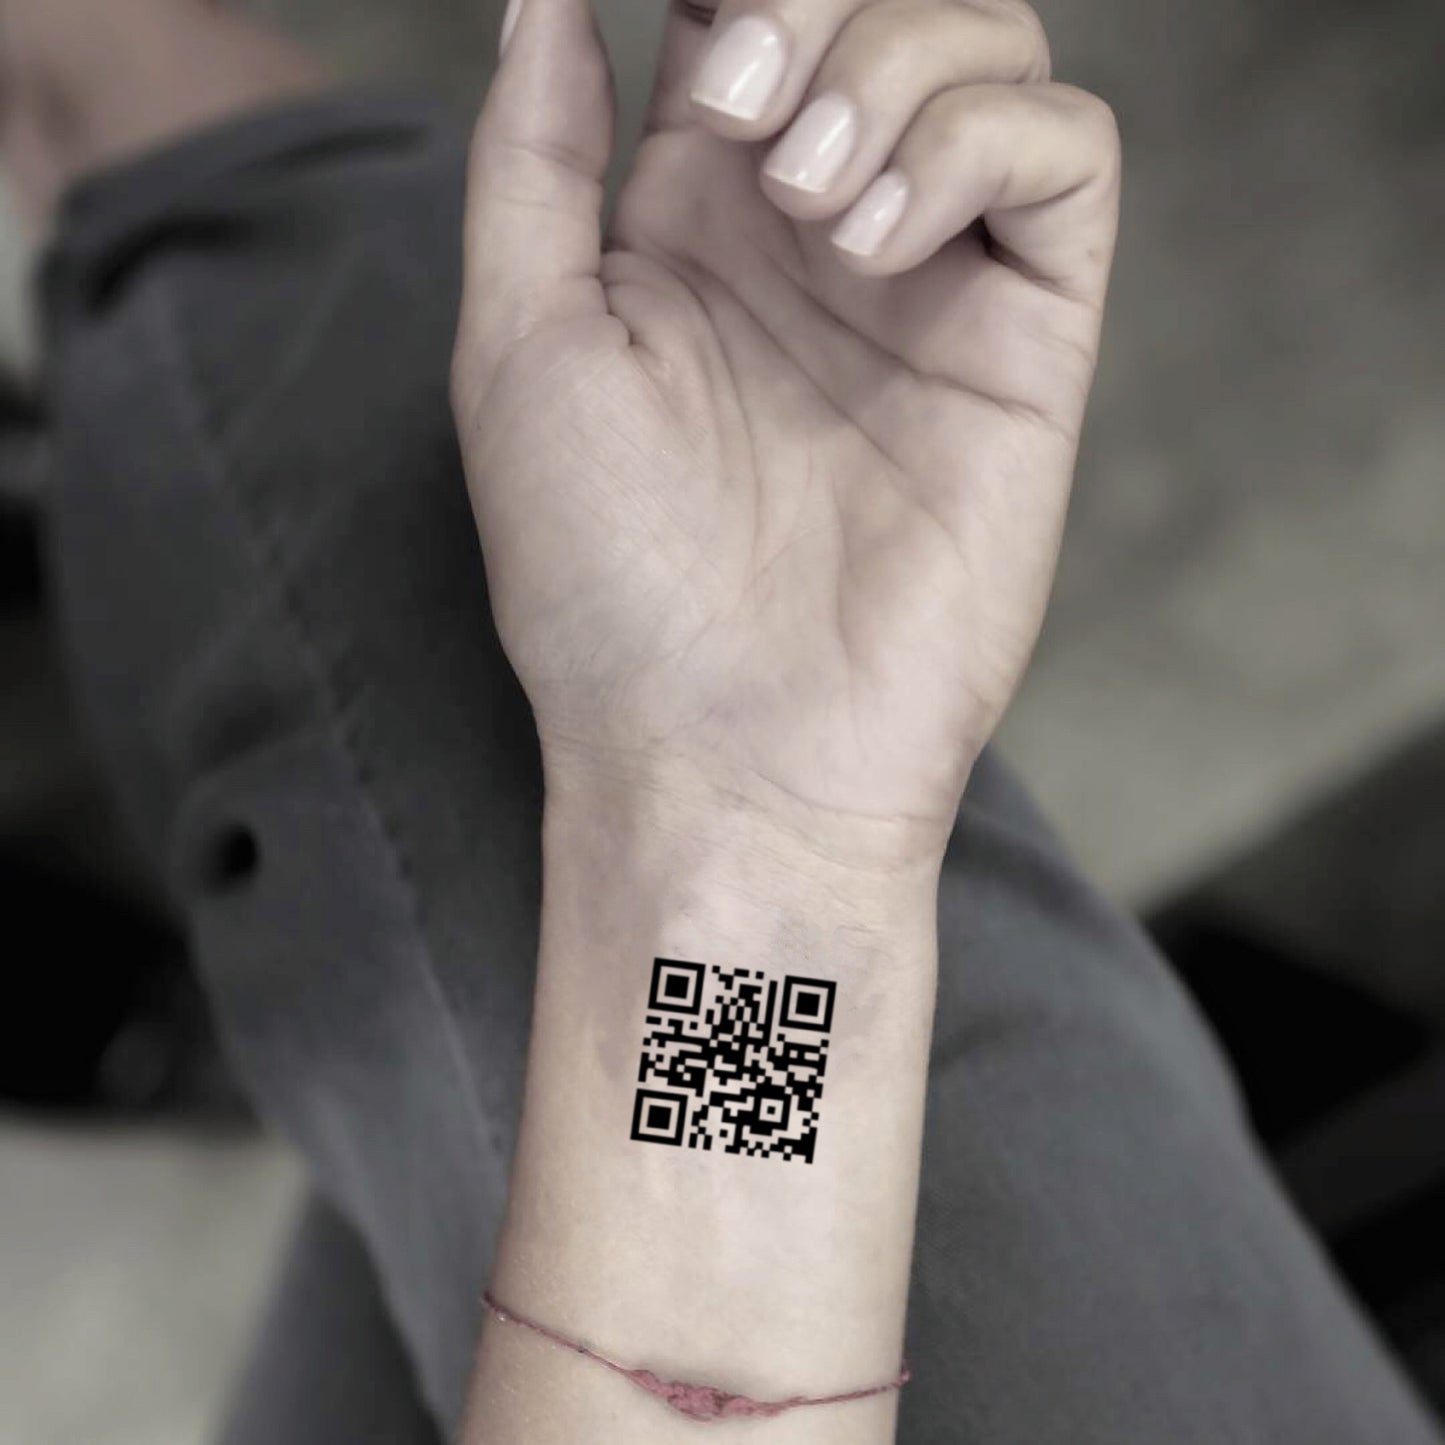 custom customise customization personalise personalization DIY fake small qr code geometric temporary tattoo sticker design idea on wrist